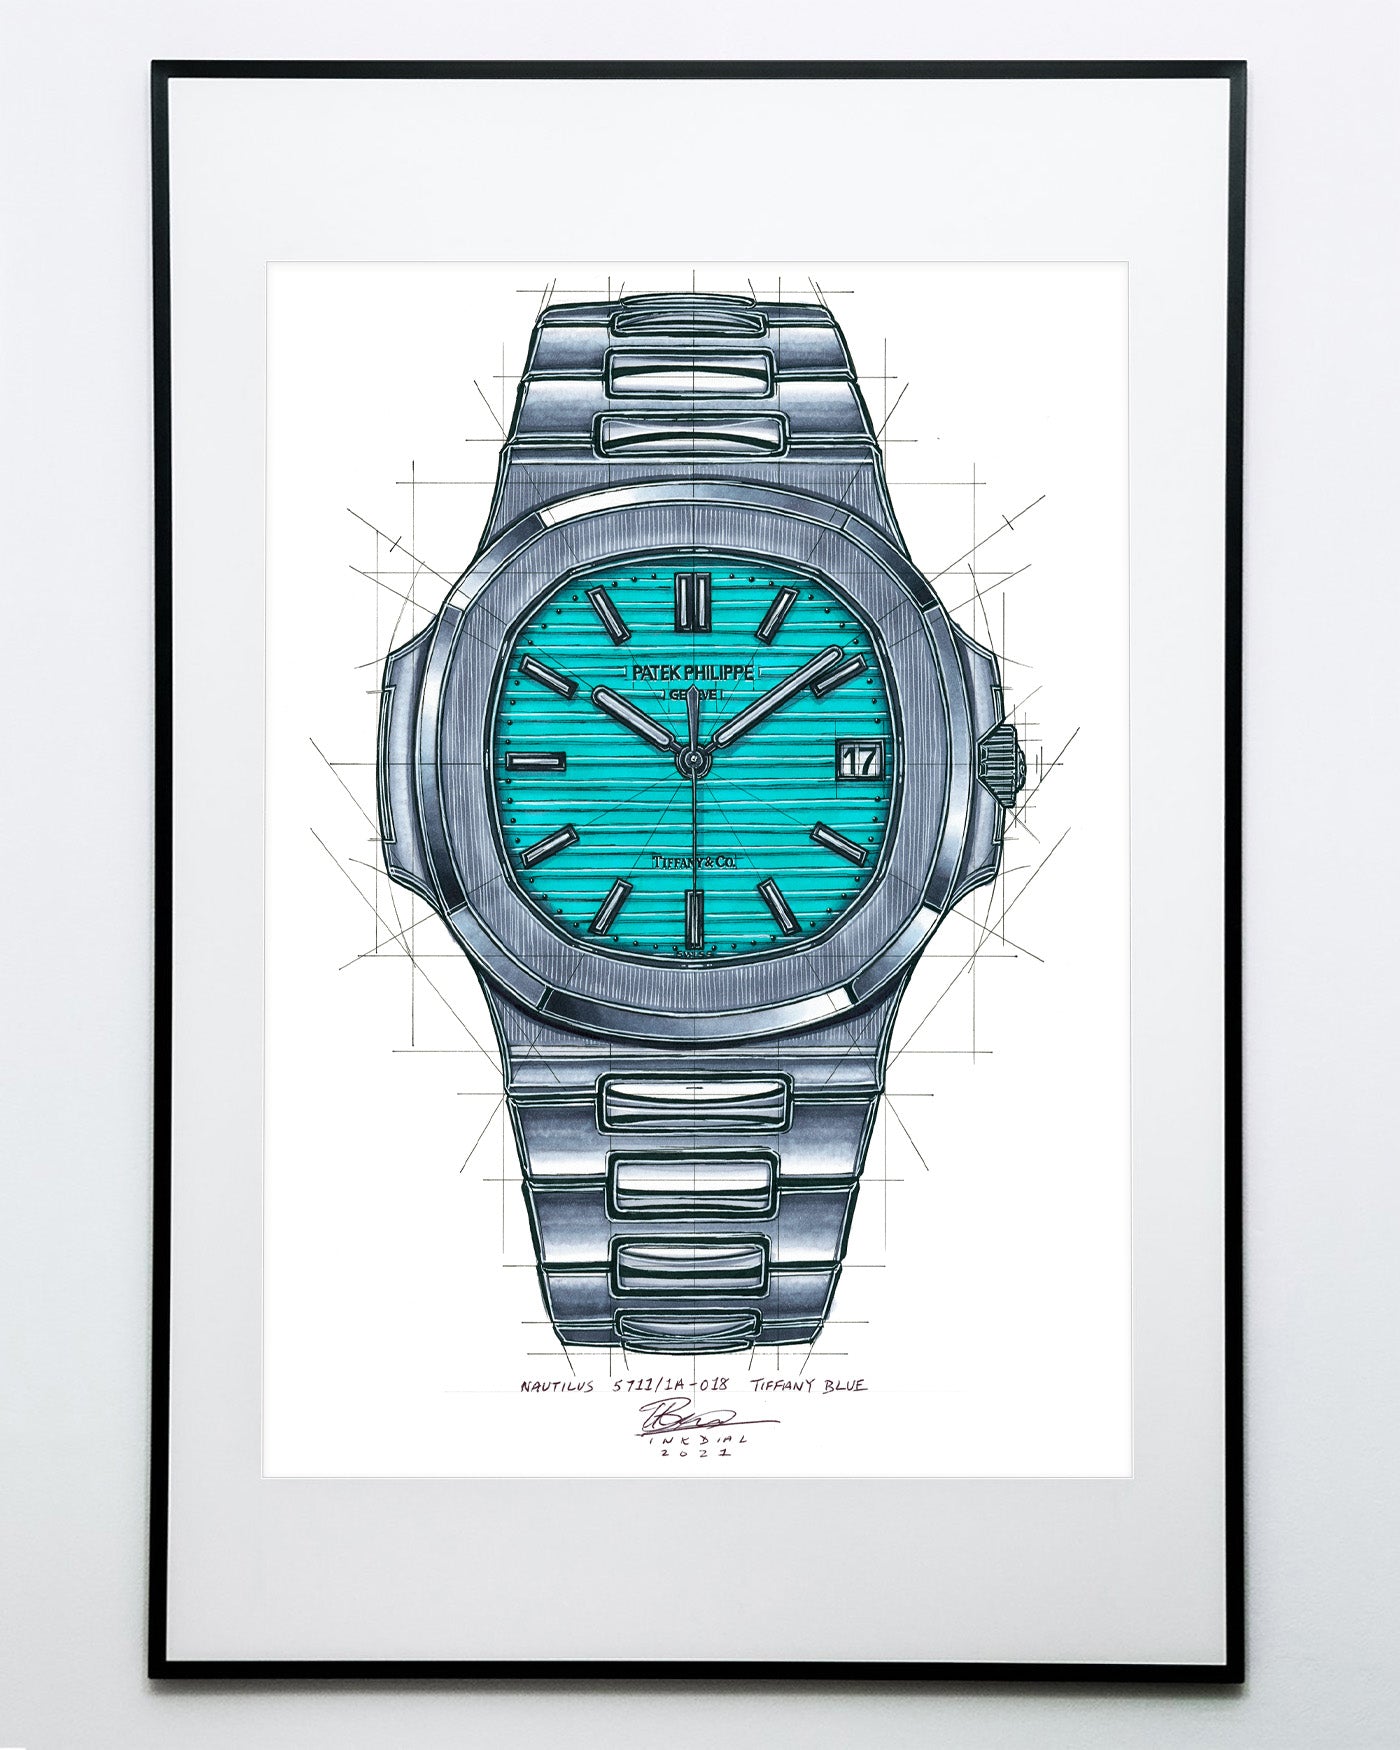 Patek Philippe's Nautilus Watch Returns in Tiffany Blue - The New